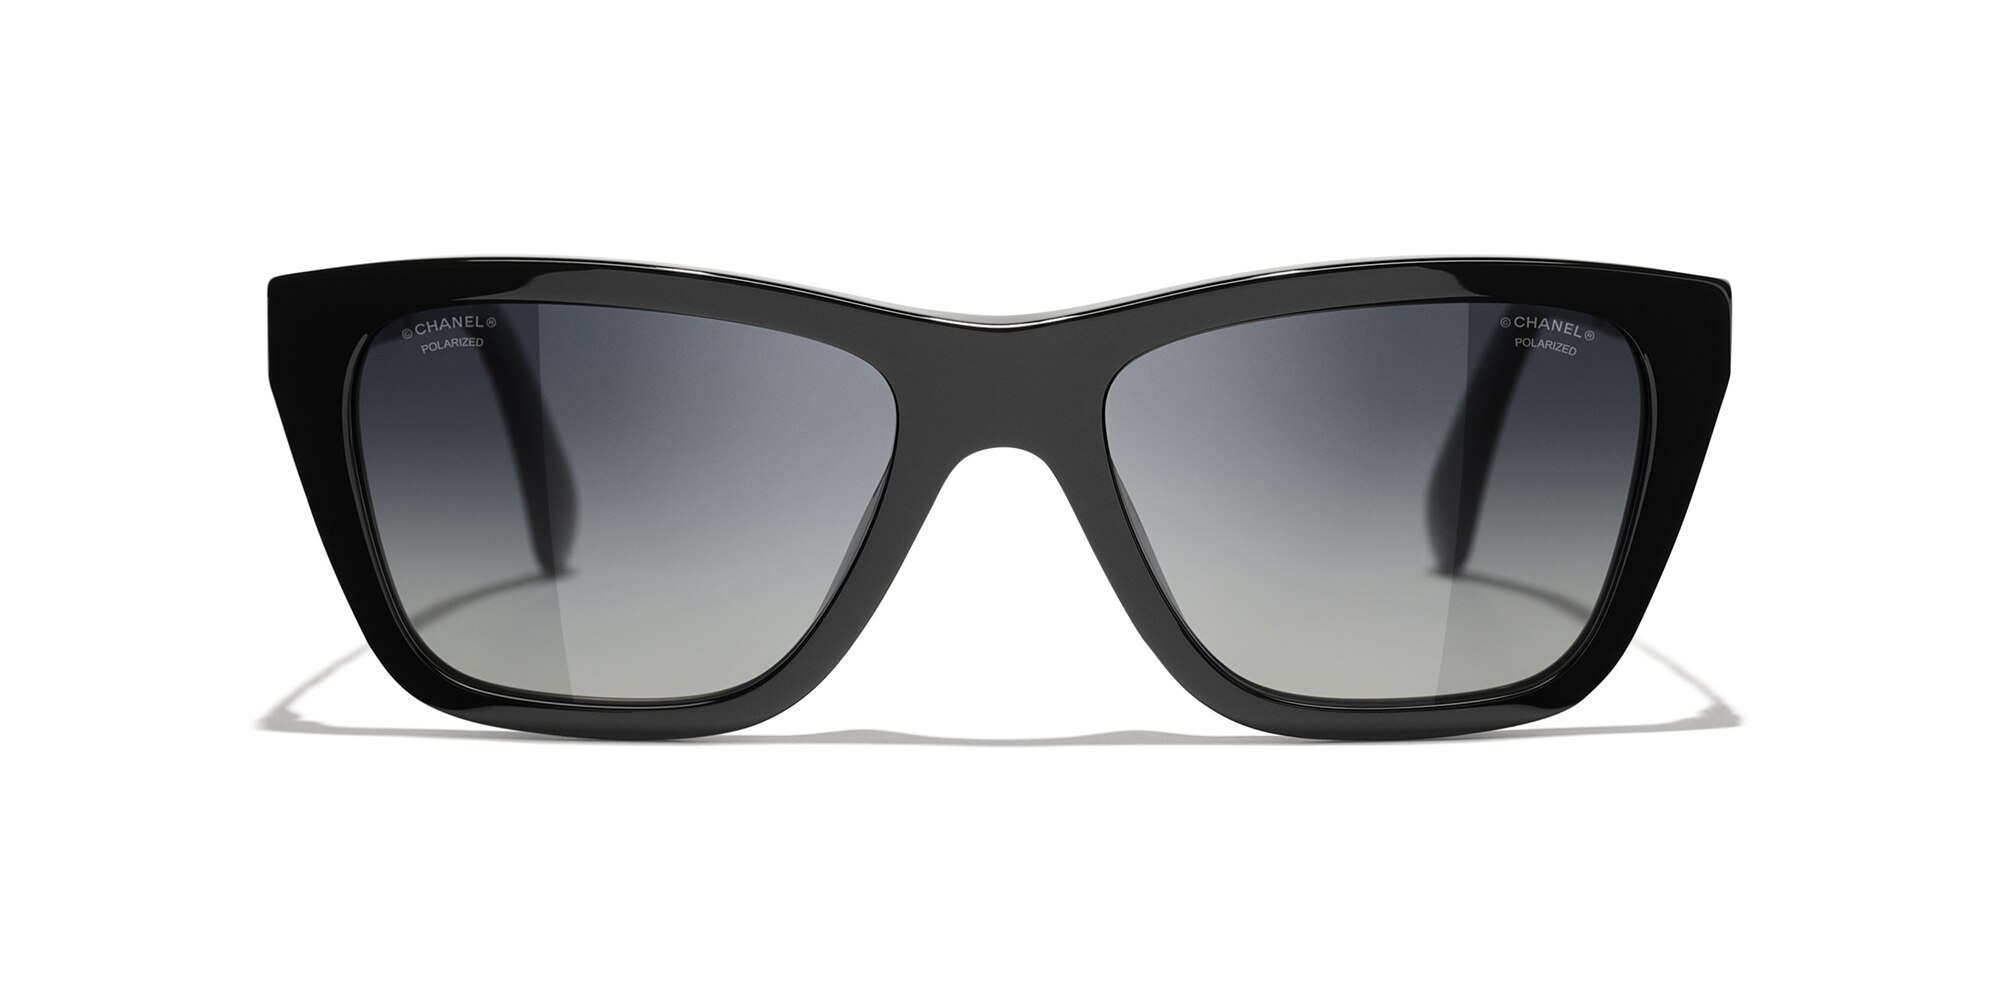 Chanel Rectangle Sunglasses C501S6 5430